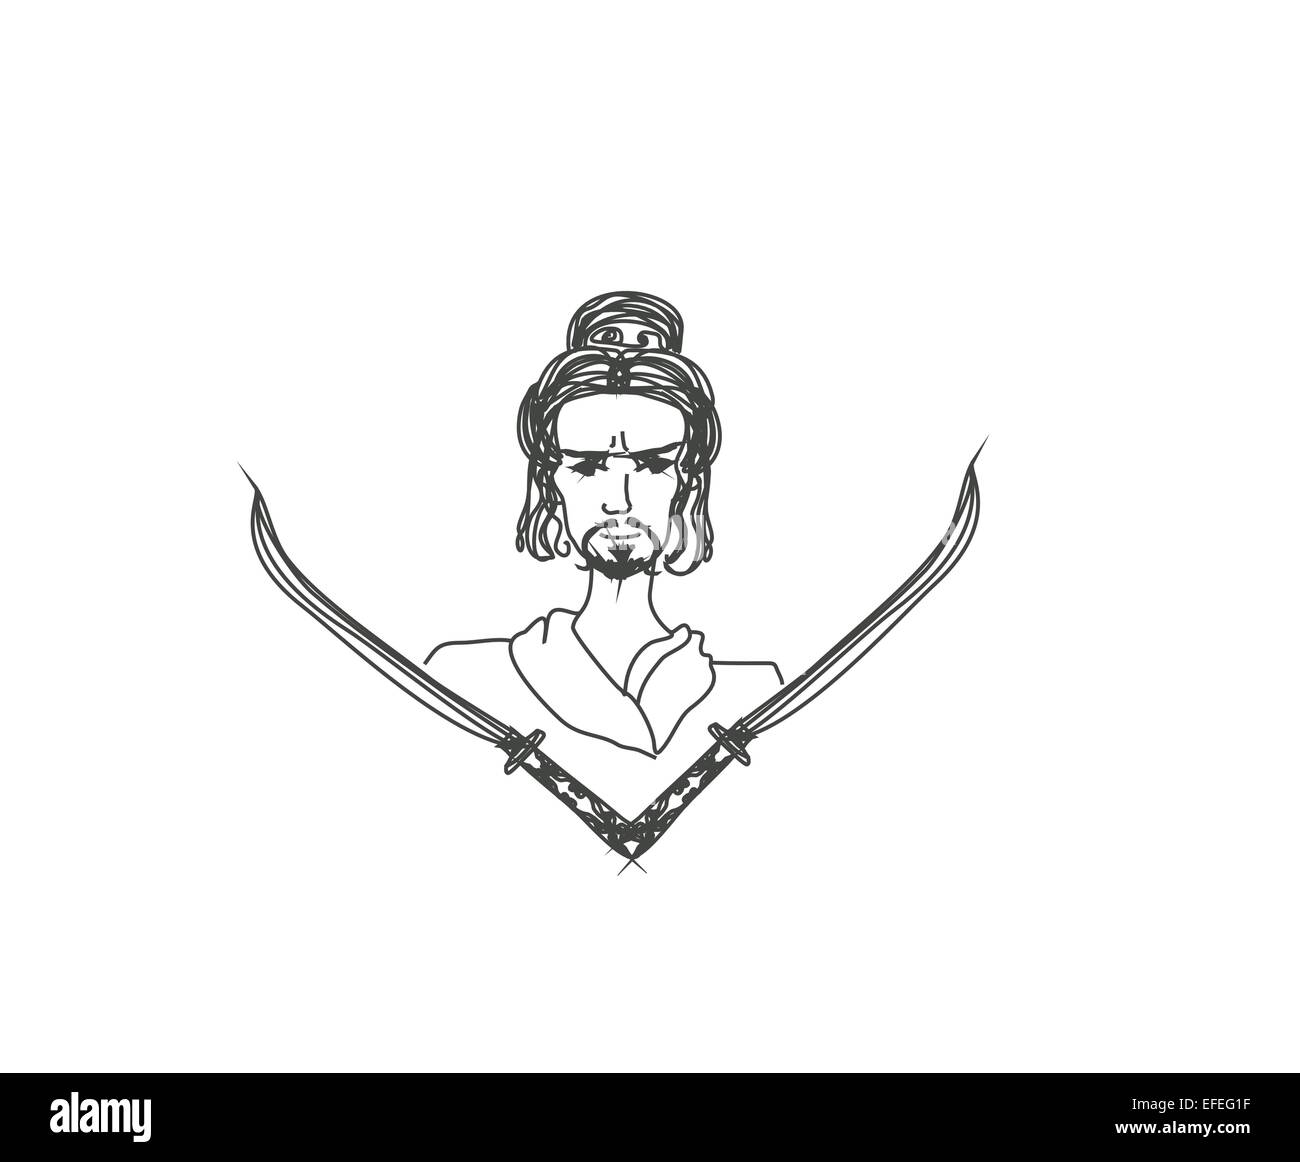 samurai portrait with swords - doodle illustration Stock Vector